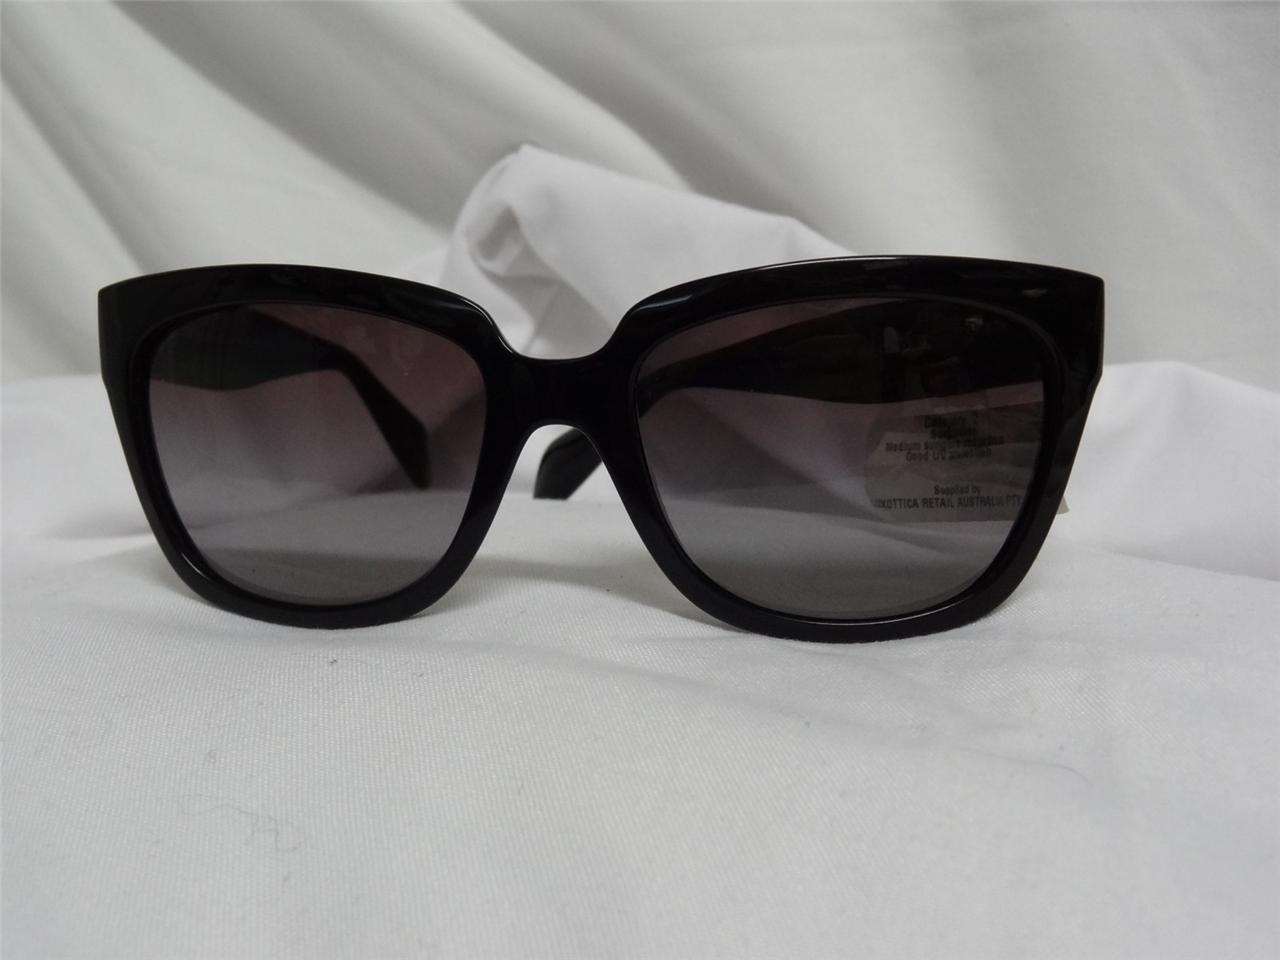 Genuine Prada - SPR 07P Sunglasses - 56/18 Polarized | eBay